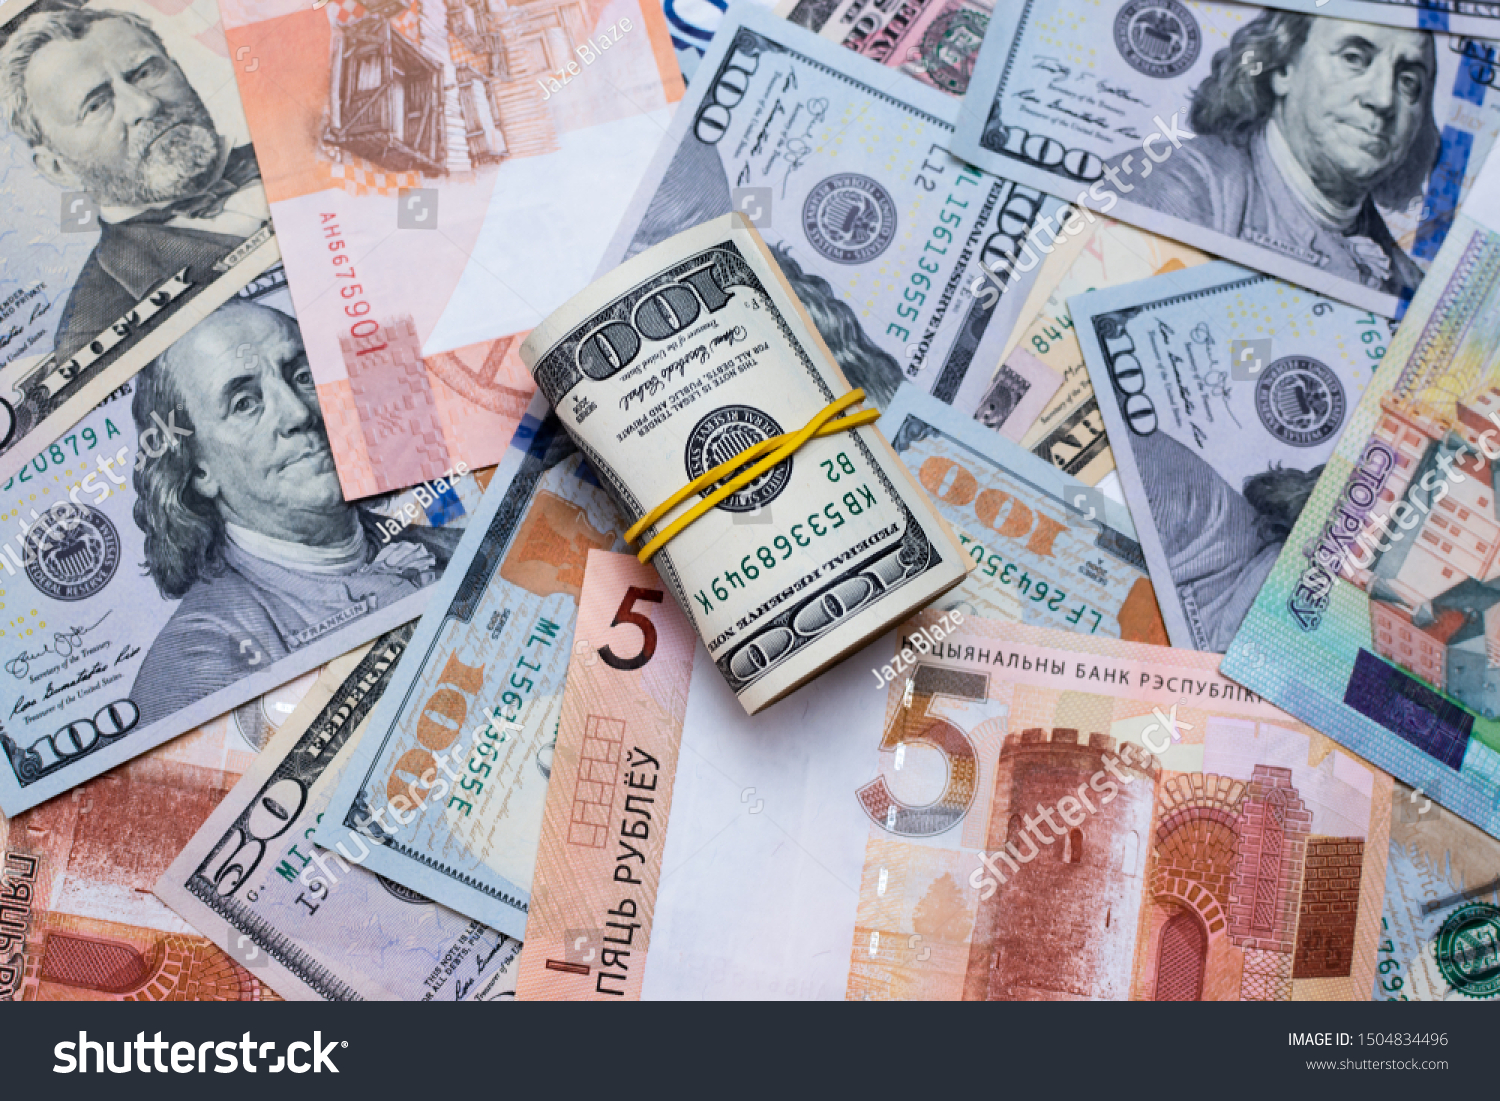 Орган иностранной валюты. Иностранная валюта картинки. Доллар евро рубл. Dollars to Euros.